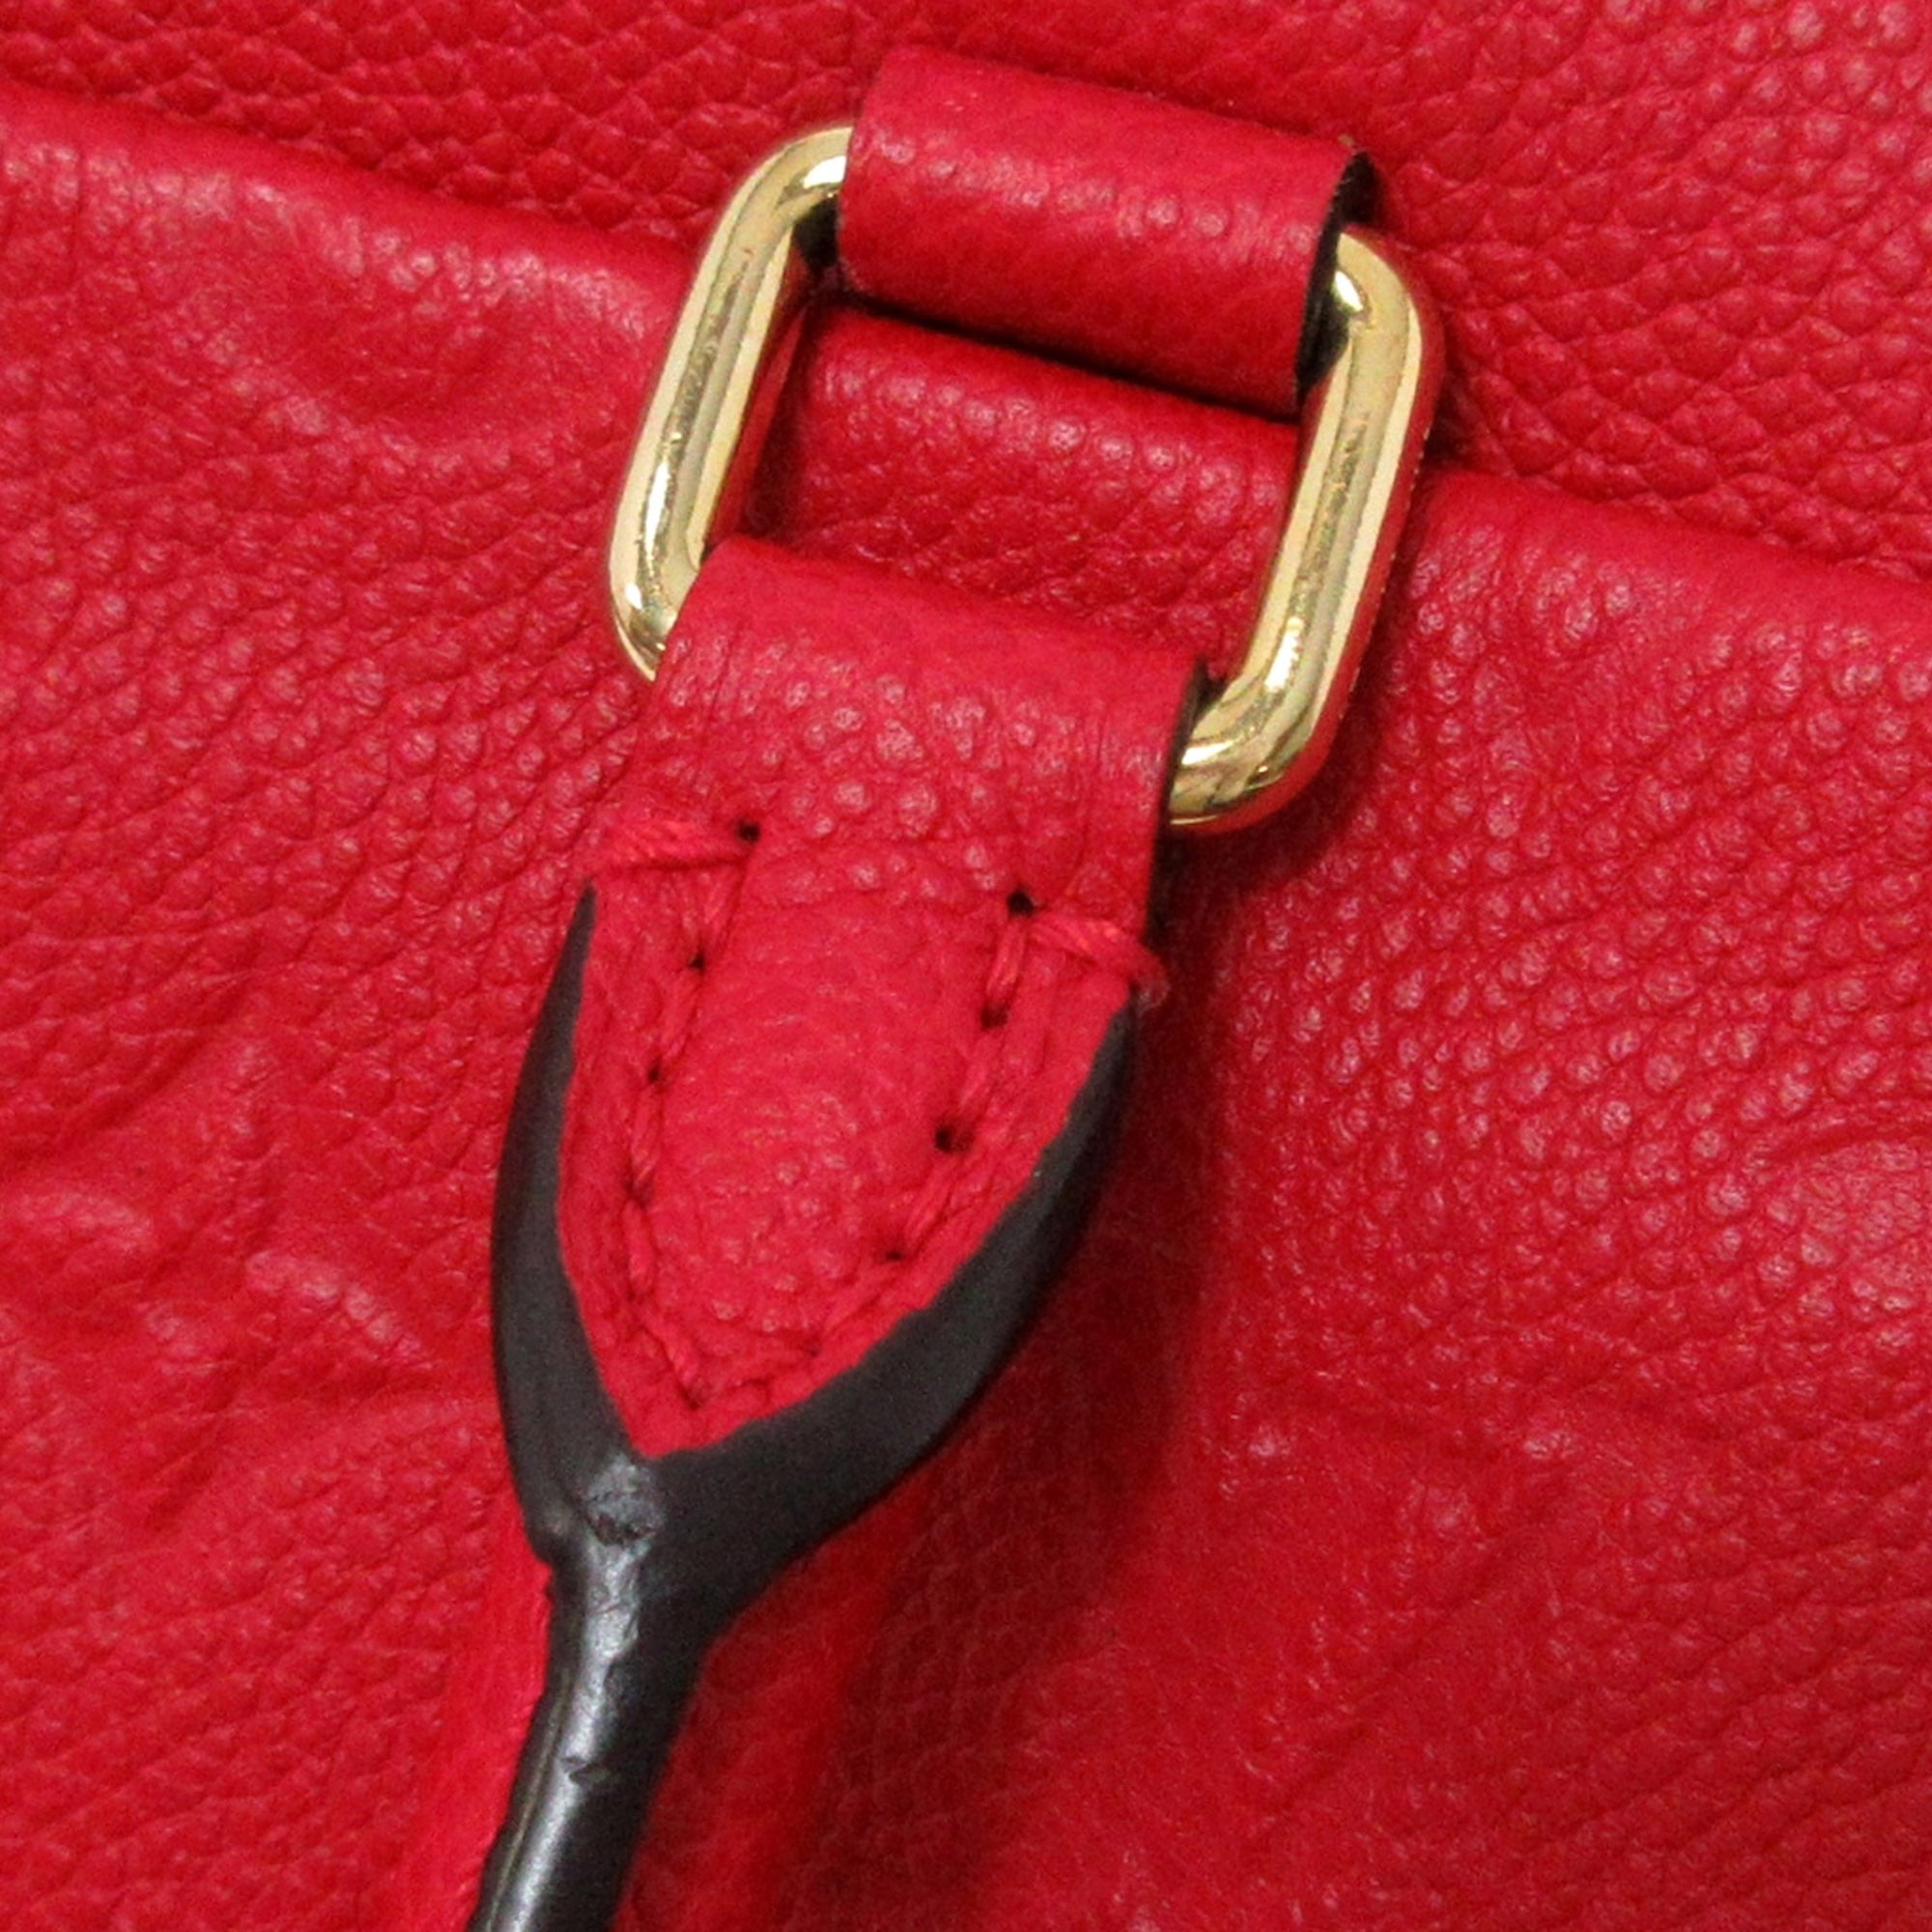 Speedy Bandouliere 25 Top handle bag in Monogram Empreinte leather, Gold  Hardware